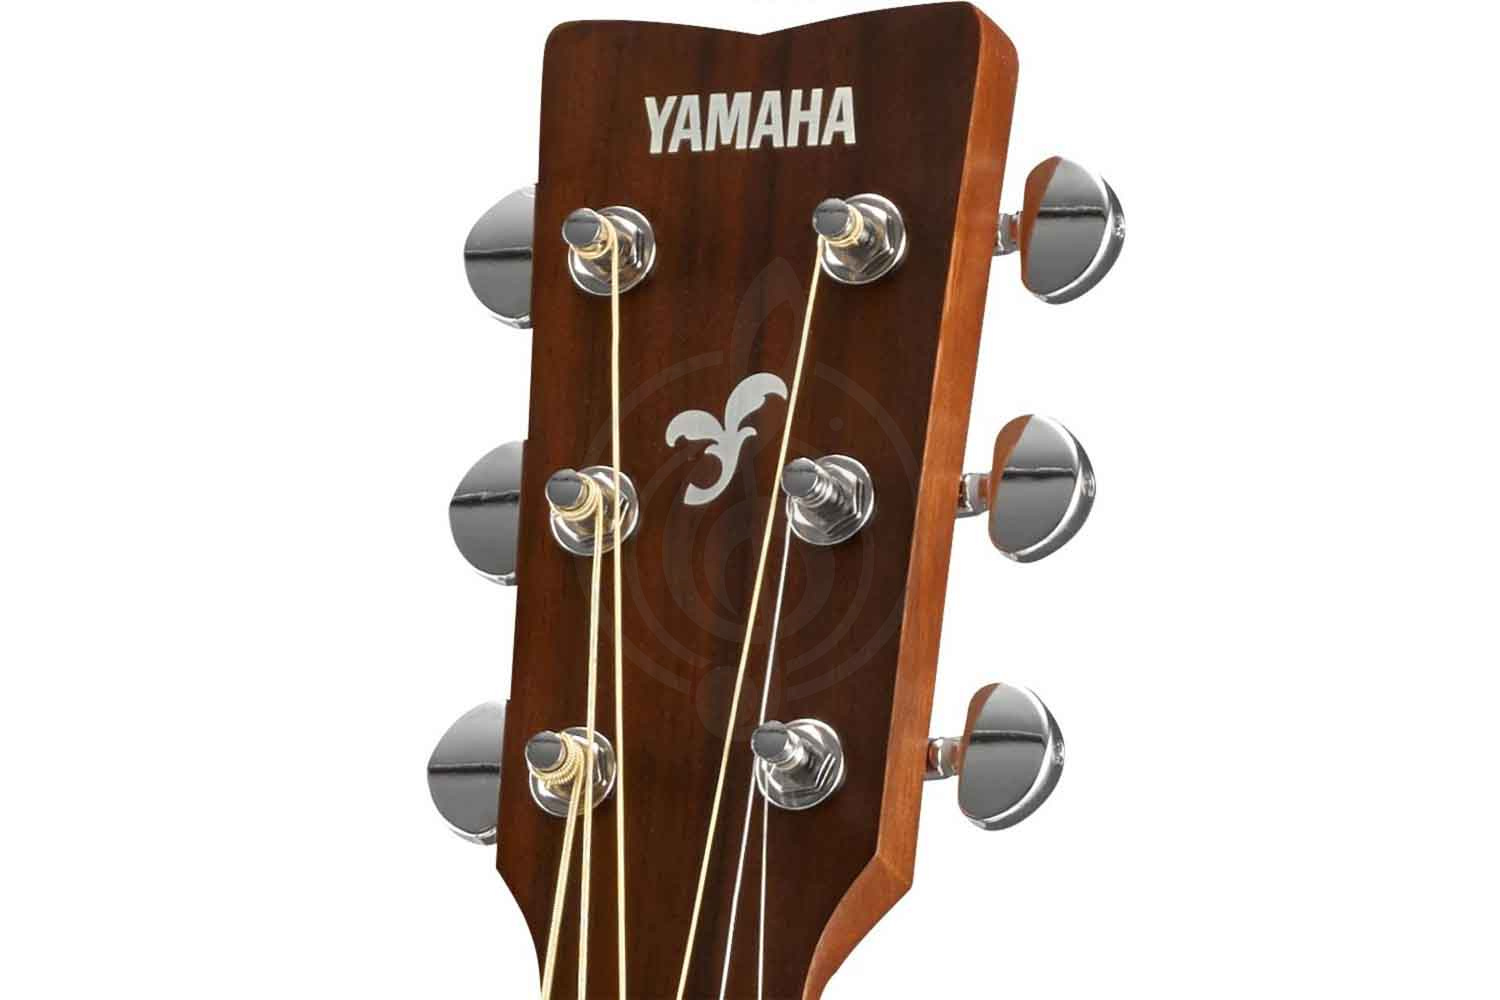 Акустическая гитара Акустические гитары Yamaha Yamaha FG800 - акустическая гитара дредноут, цвет натурал FG800 NATURAL//02 - фото 4